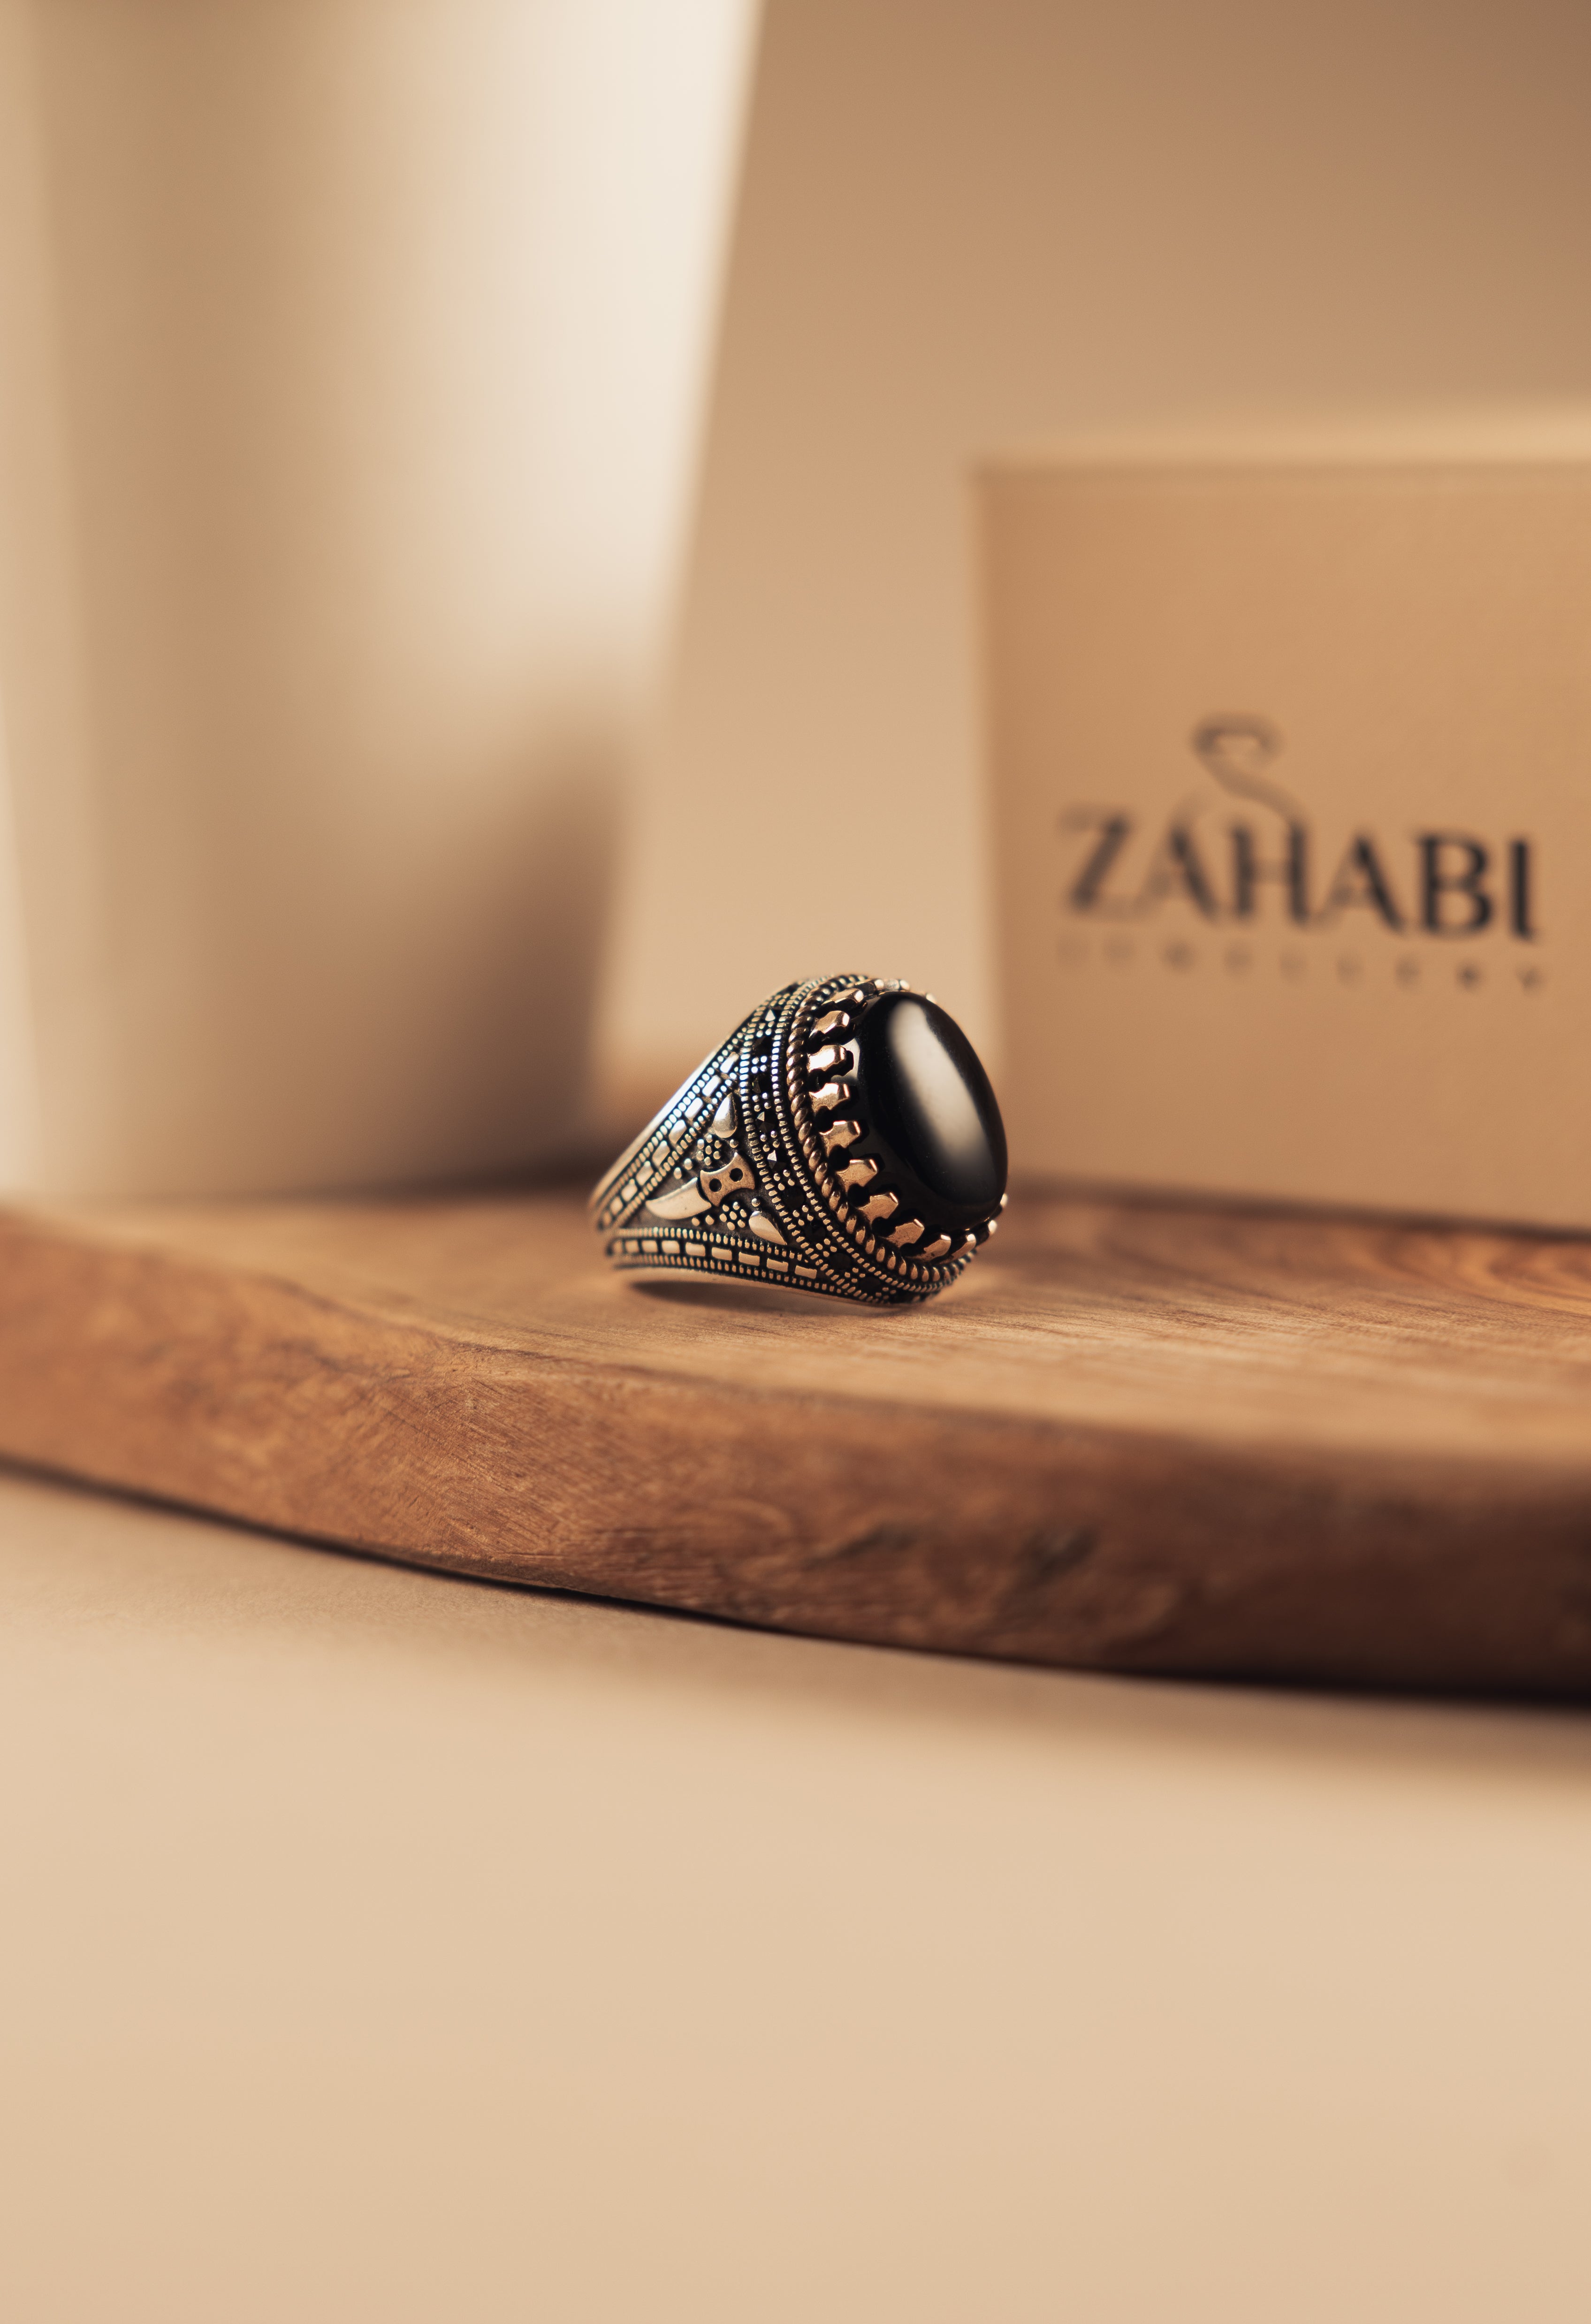 Kilij Ring - Zahabi Jewellery